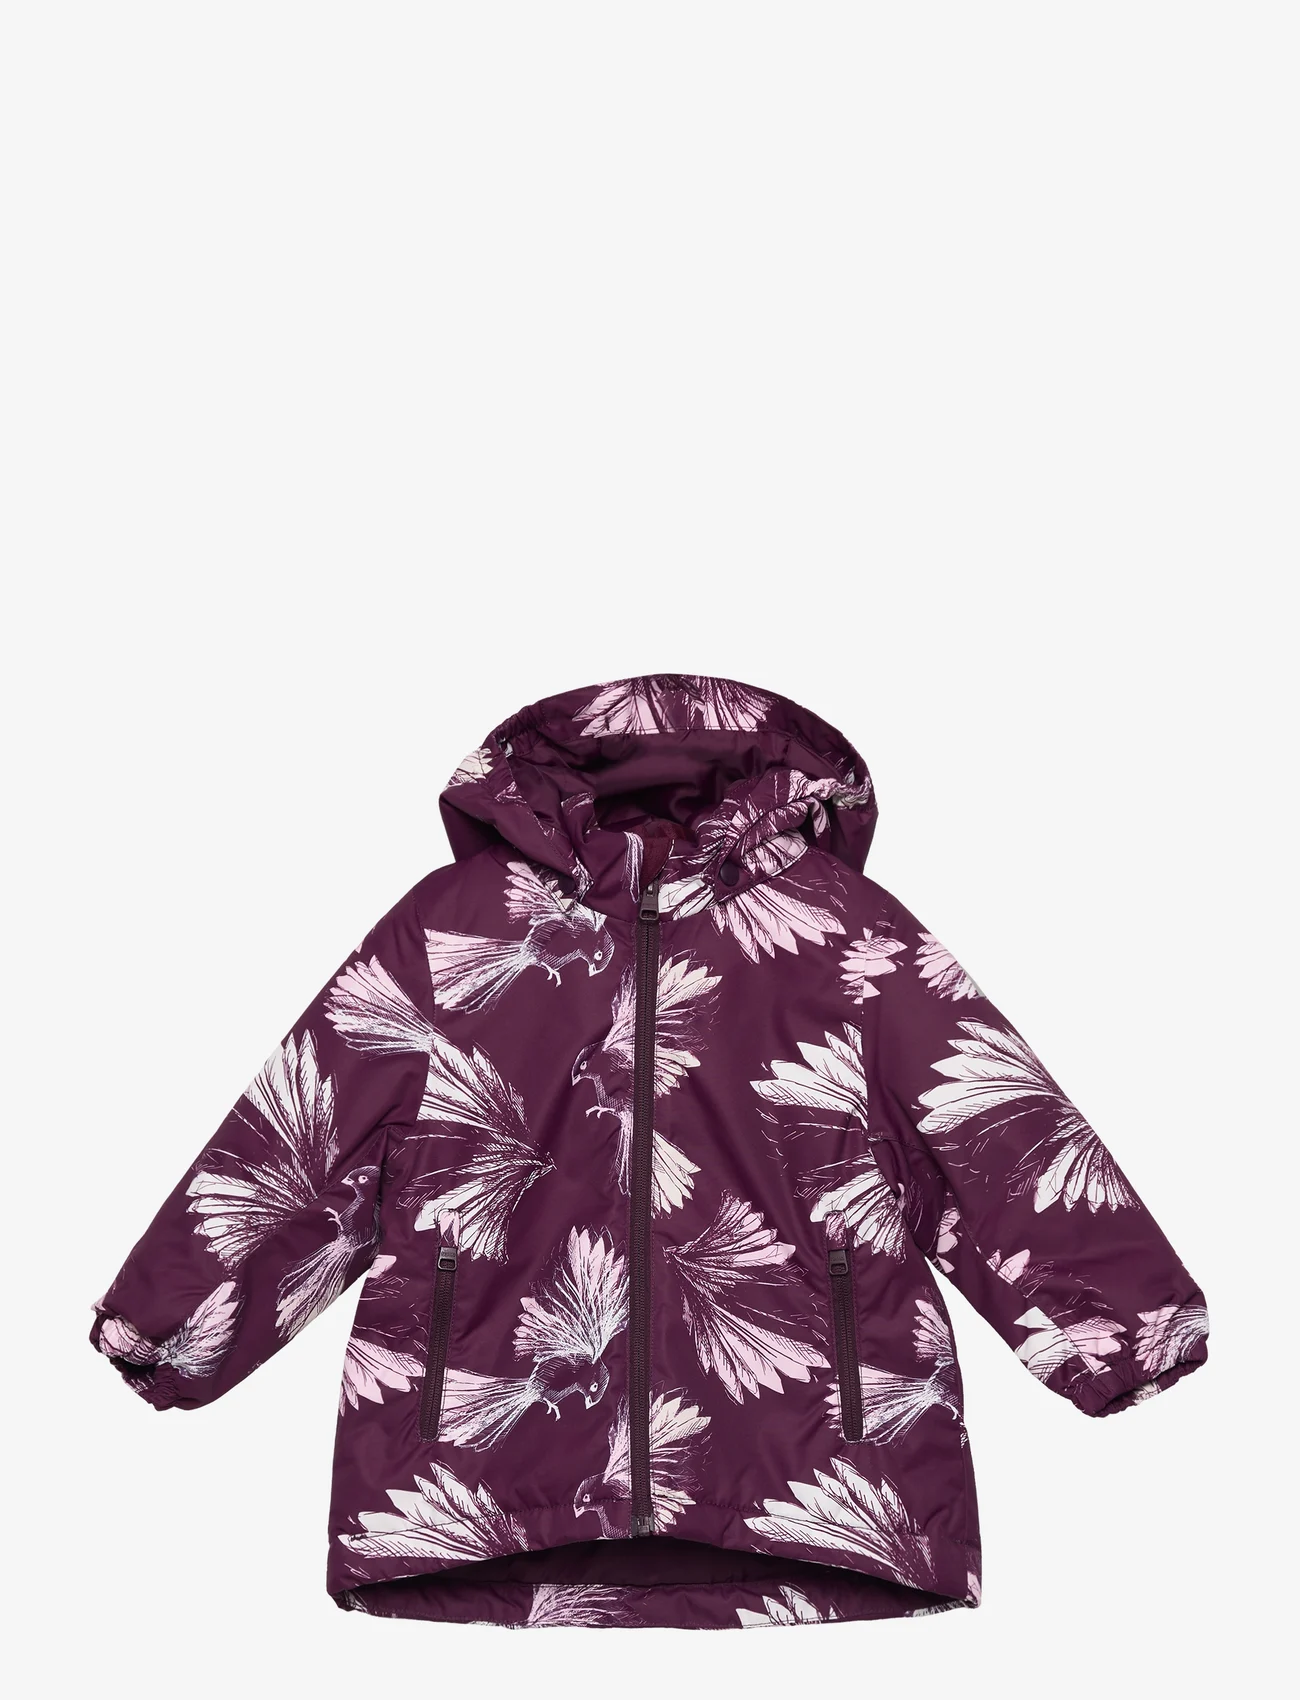 Reima - Winter jacket, Nuotio - winterjacken - deep purple - 0